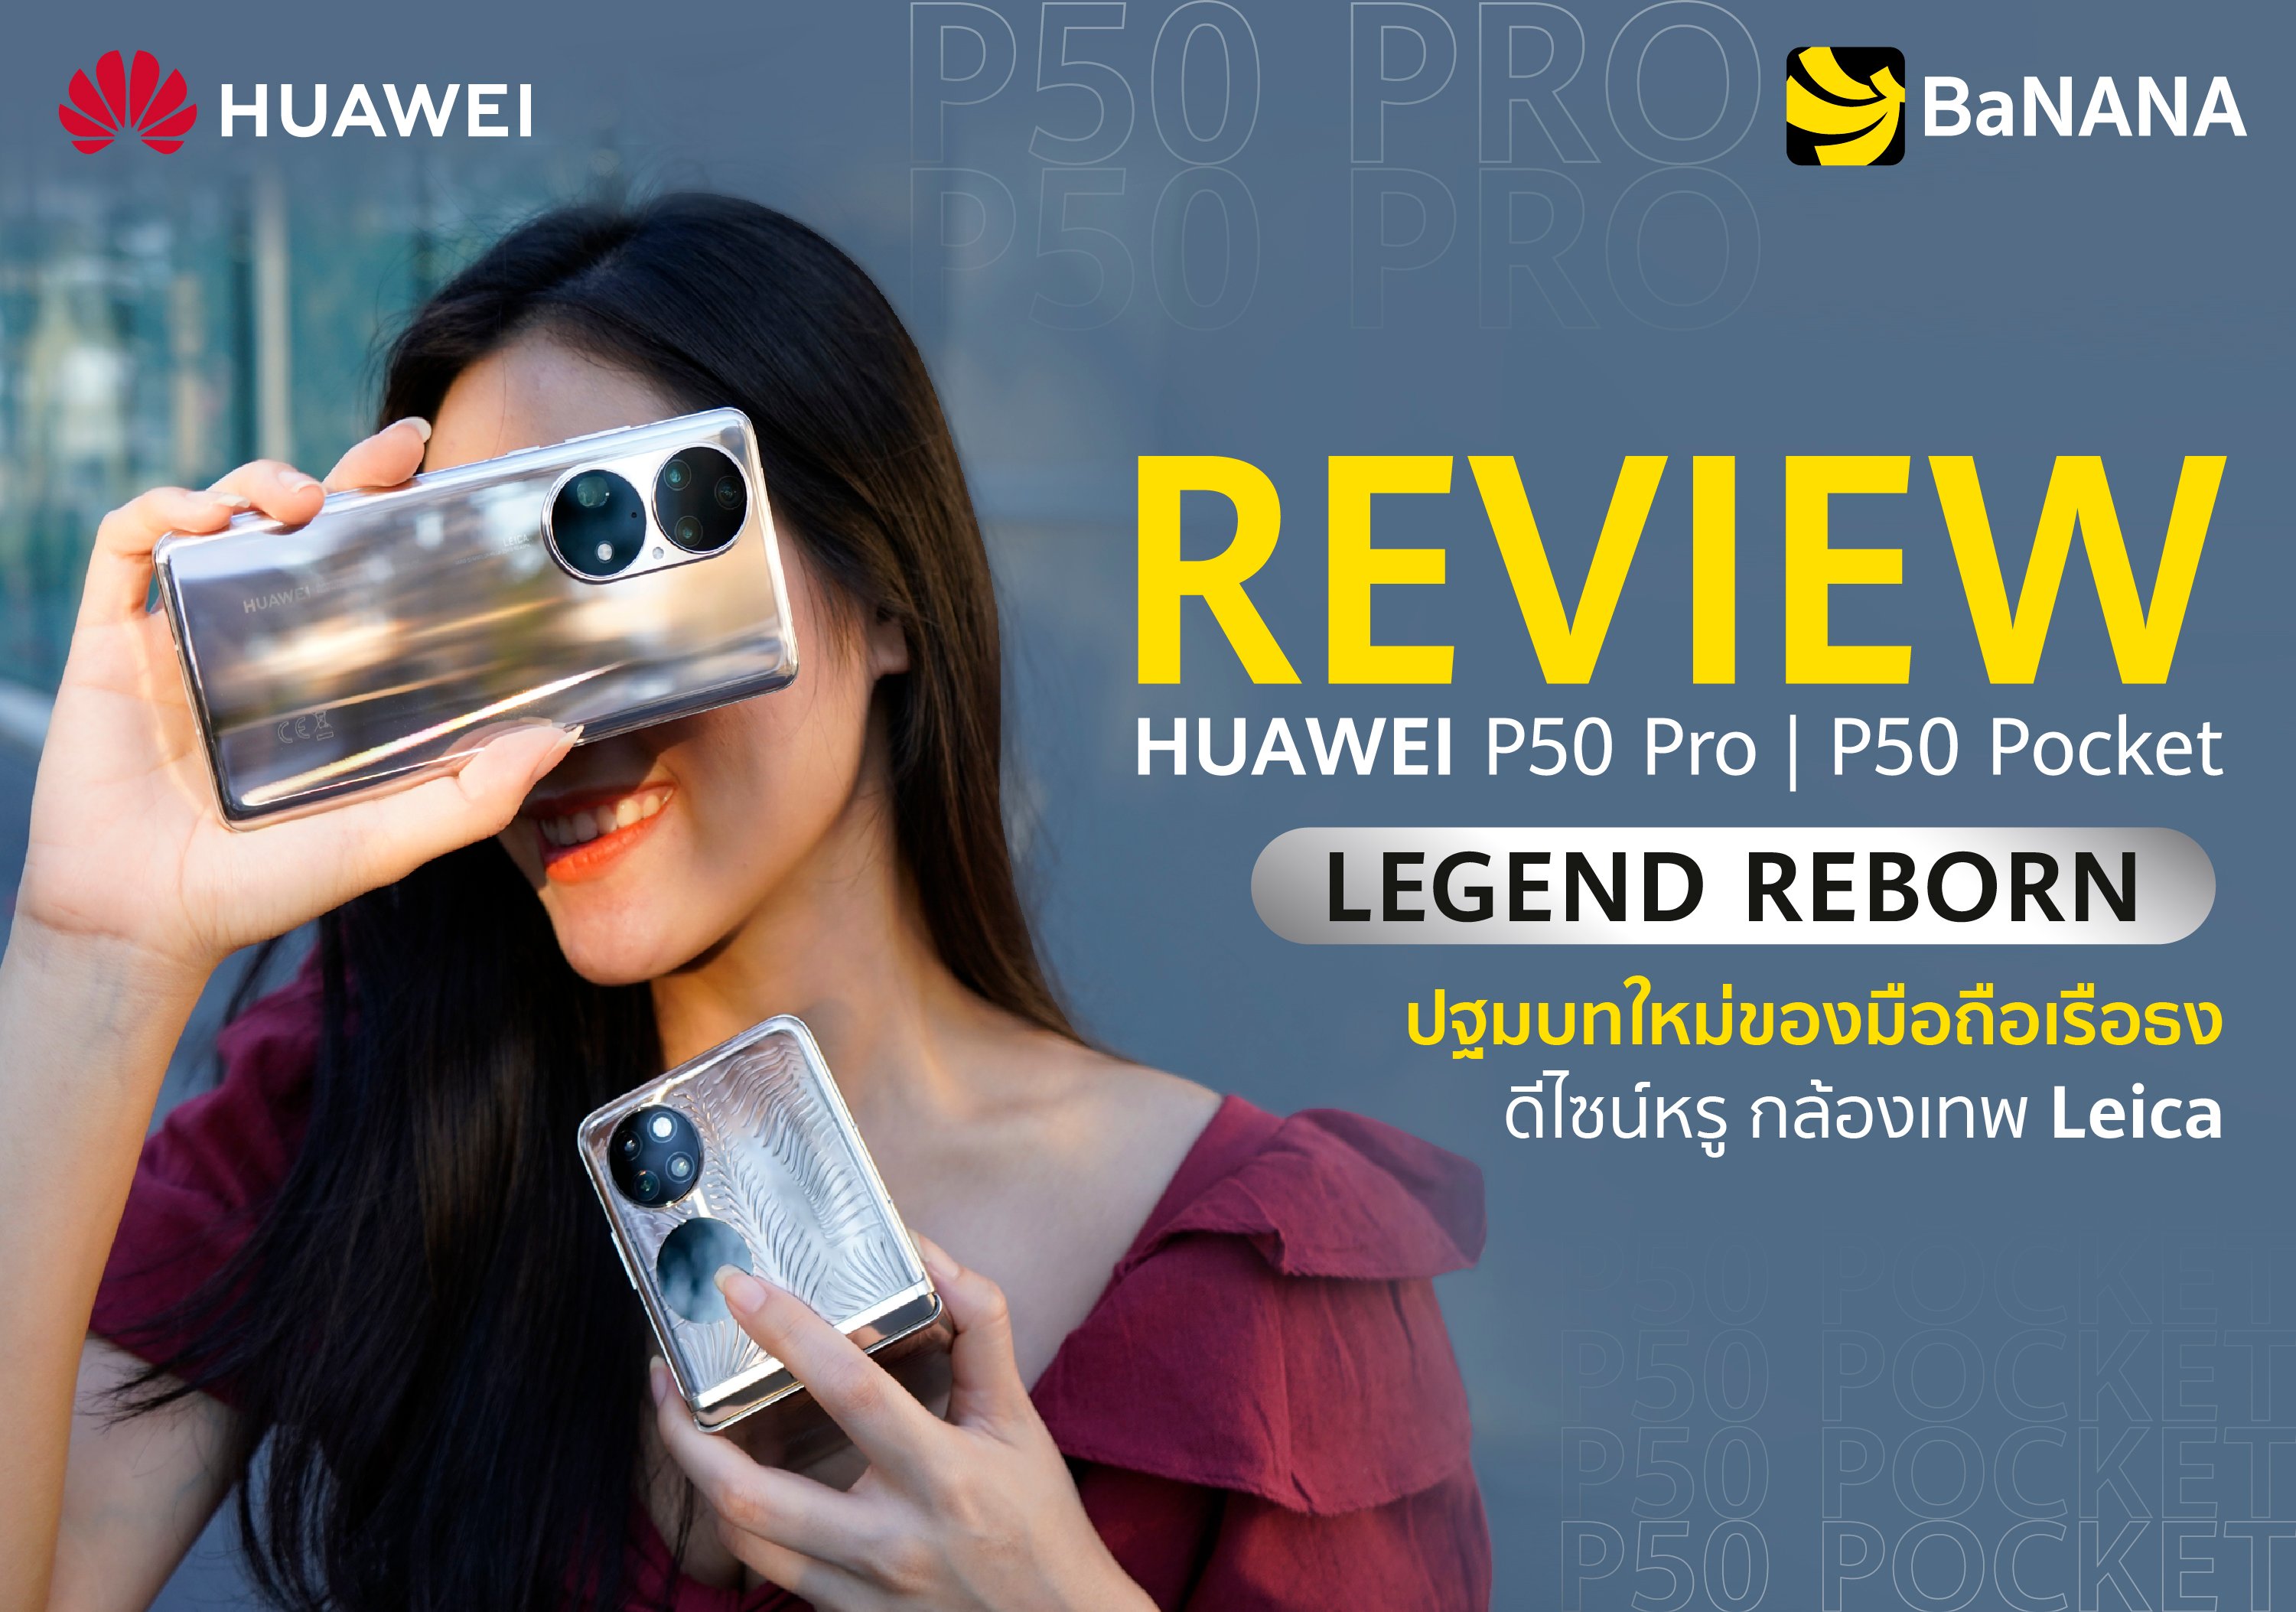 REVIEW HUAWEI P50 Pro HUAWEI P50 Pocket รีวิว